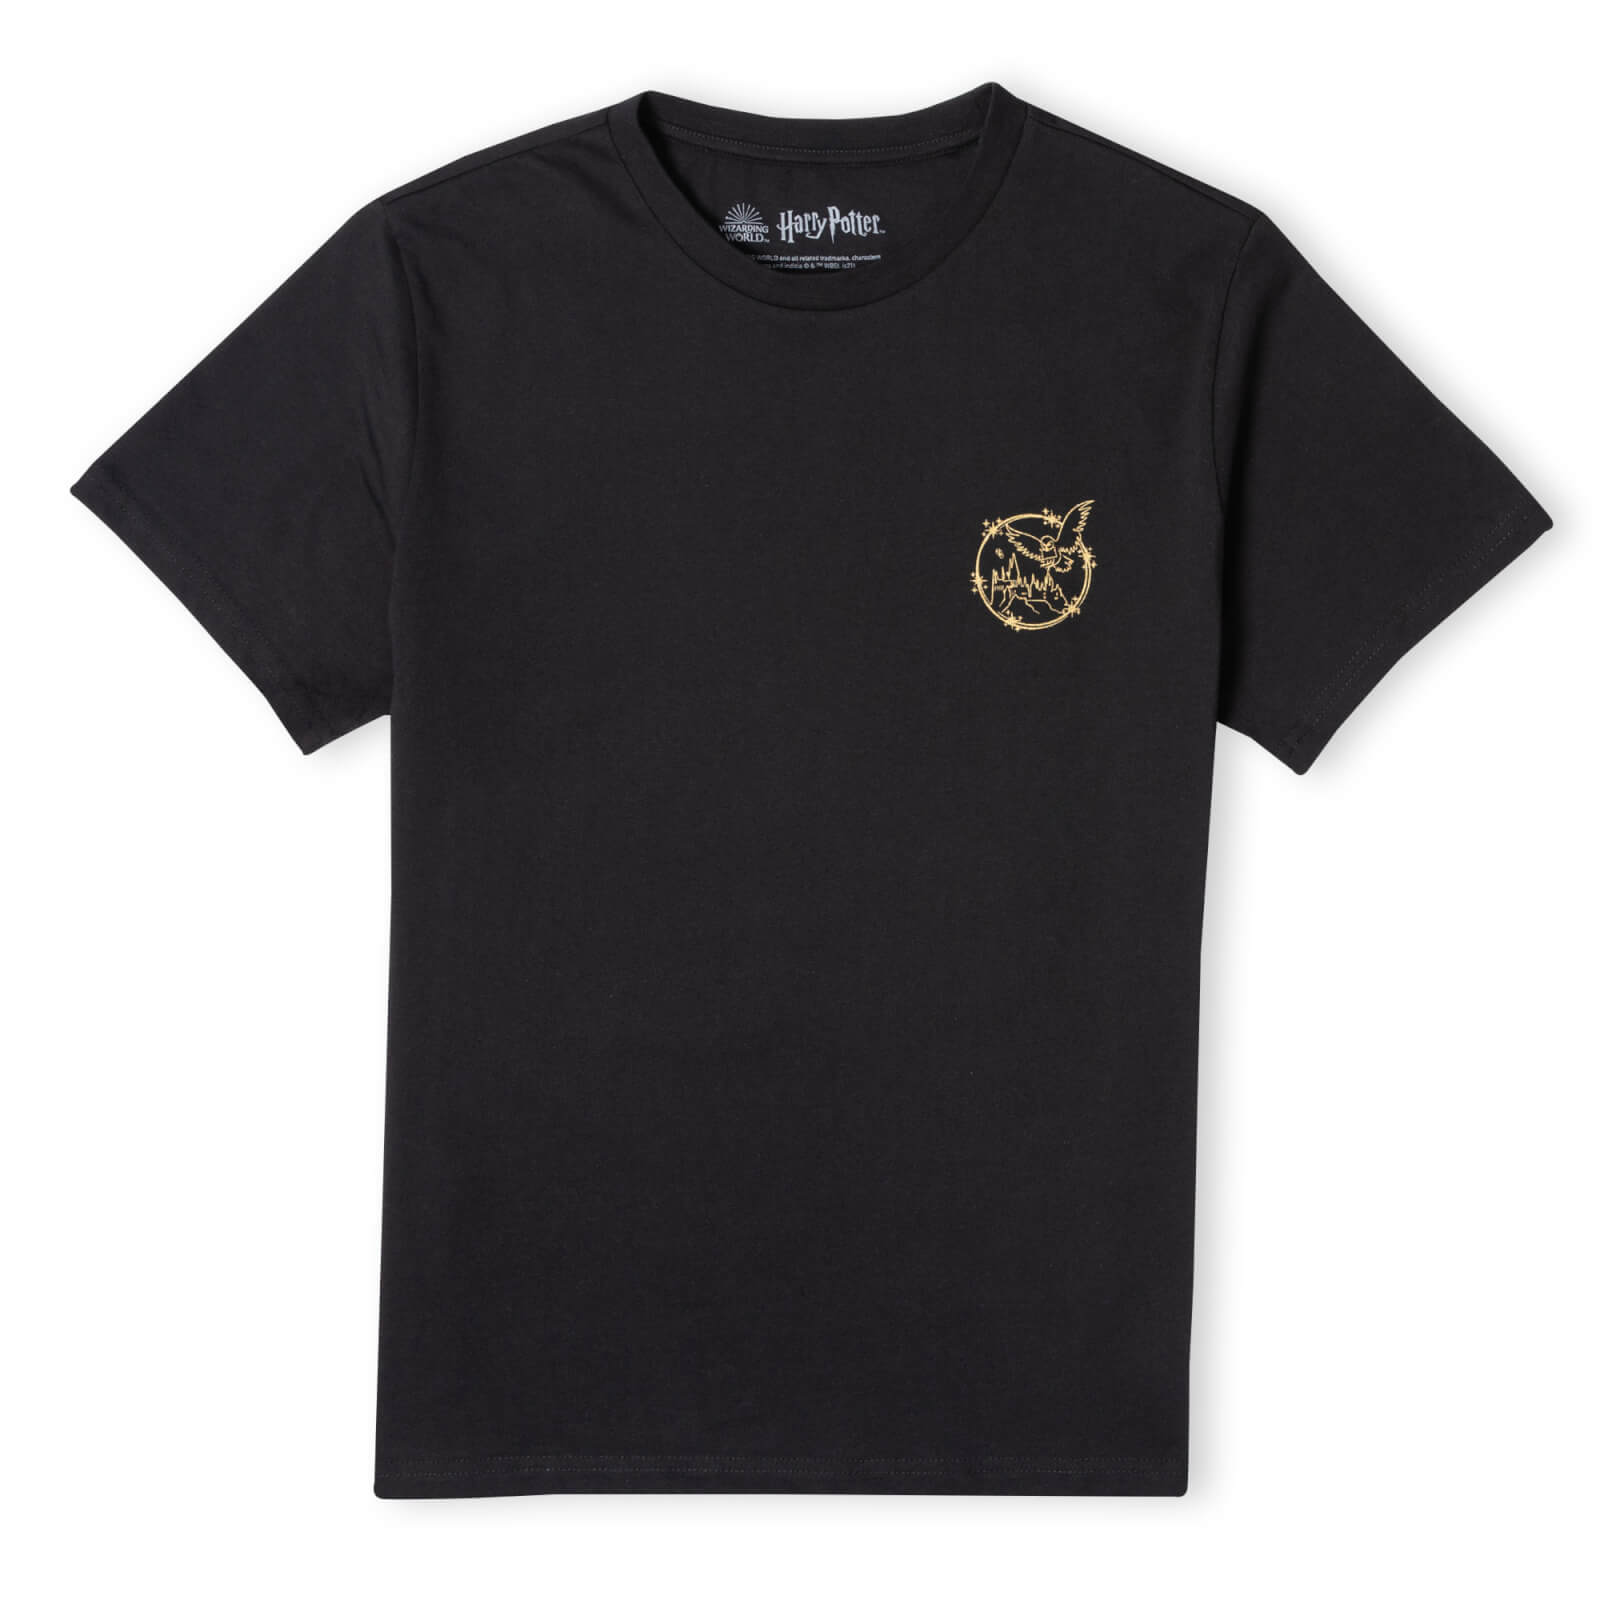 harry potter metallic pocket print men's t-shirt - black - xl - nero